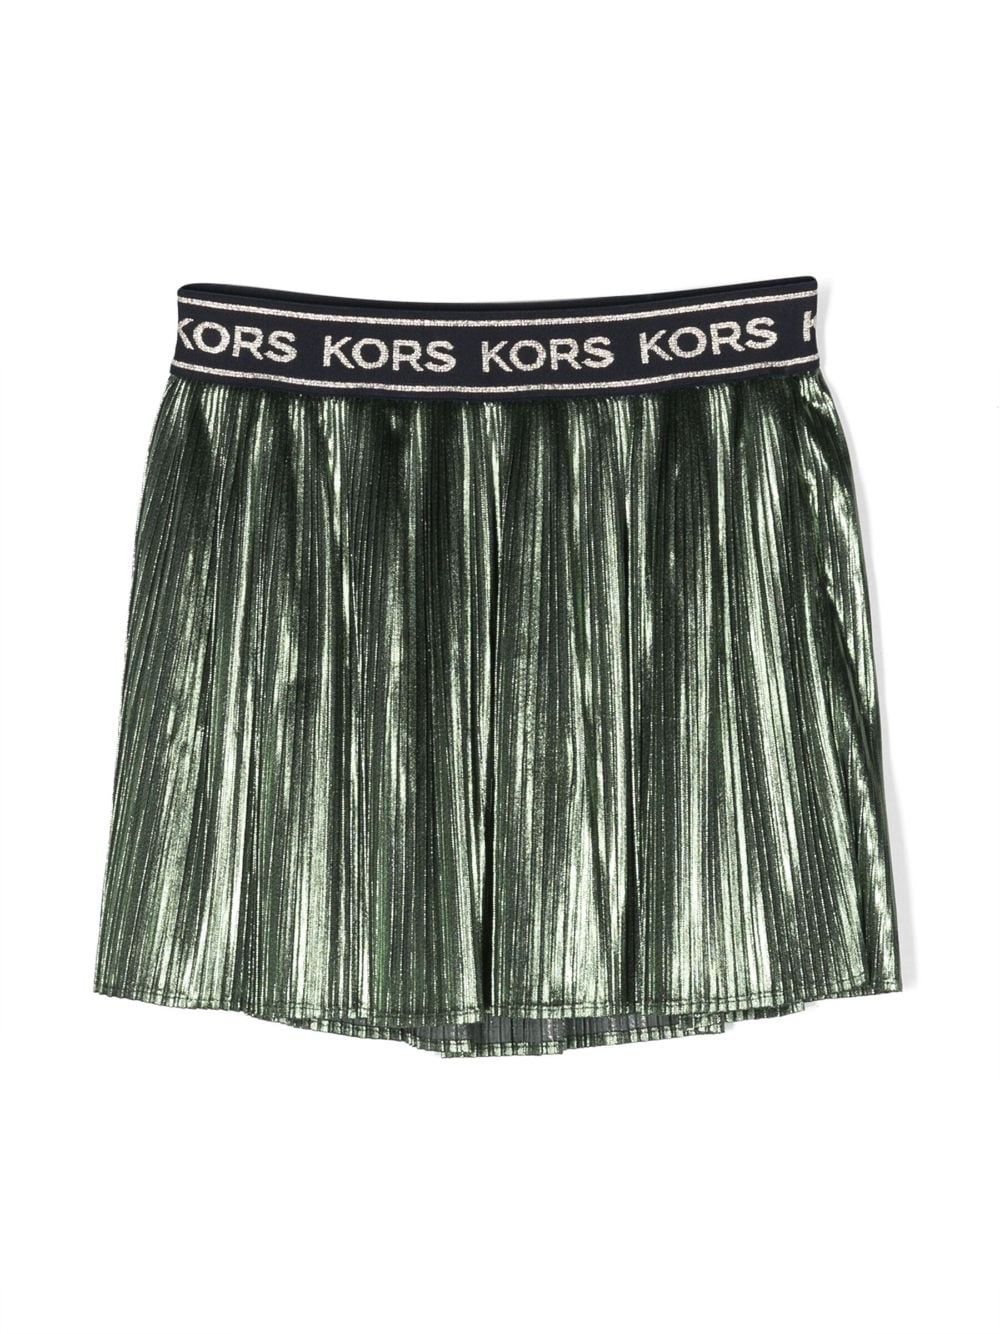 Michael Kors Kids logo-waistband metallic pleated skirt - Green von Michael Kors Kids